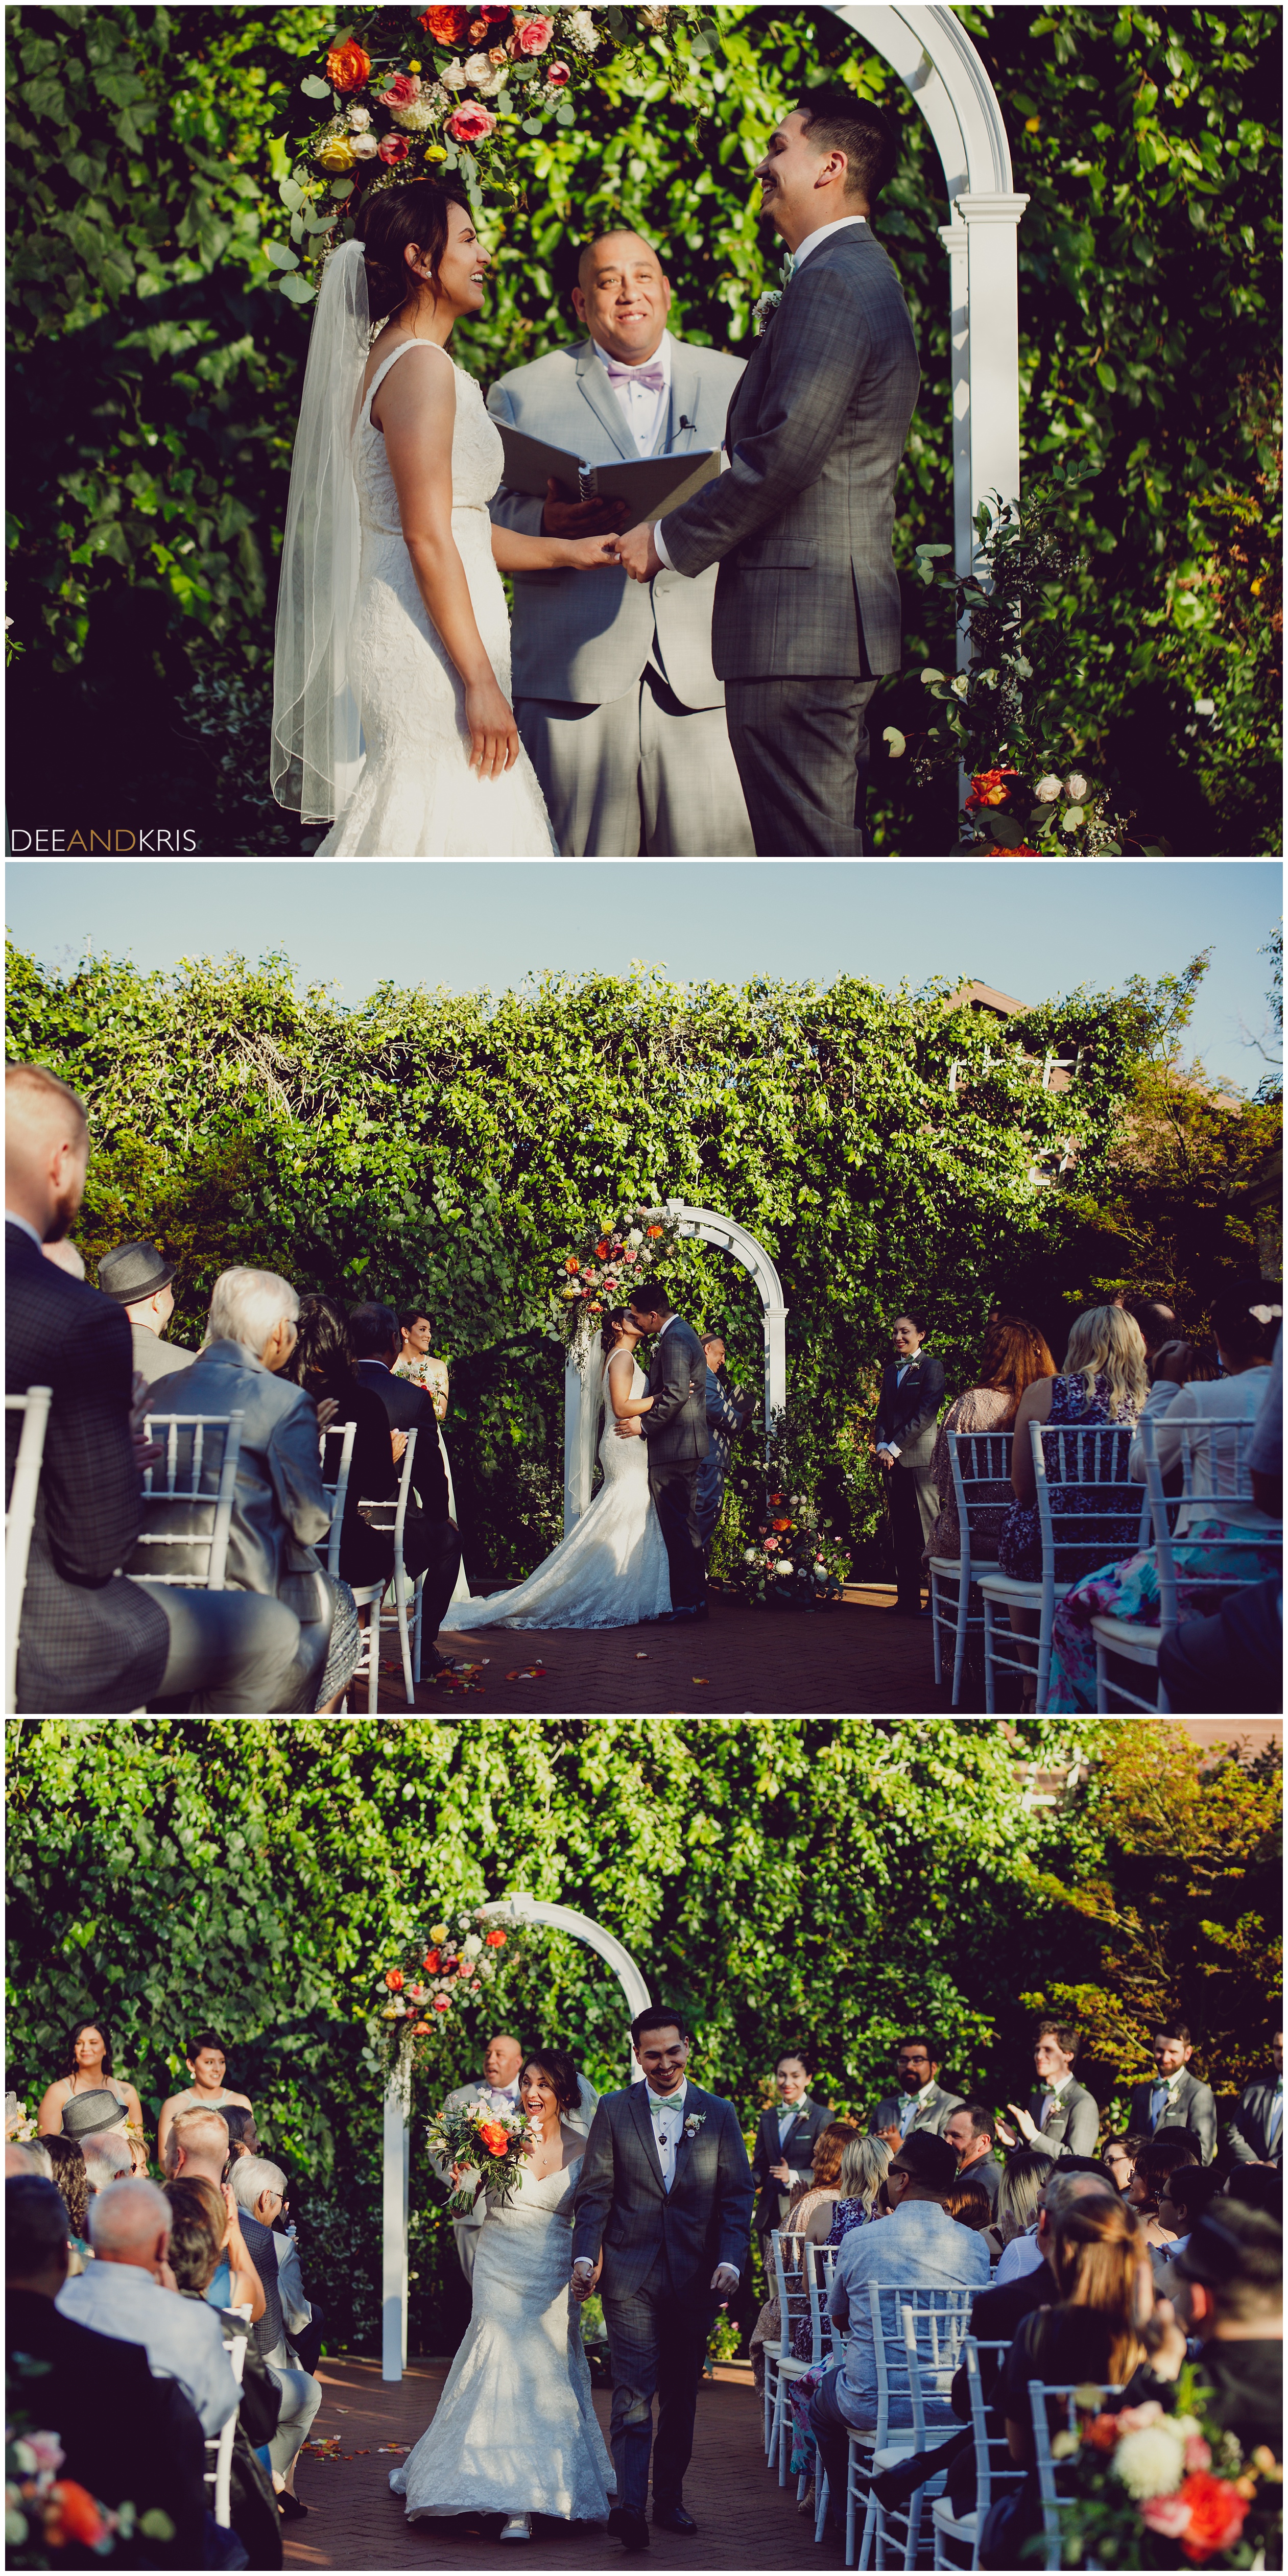 vizcaya wedding, vizcaya sacramento, star wars wedding, dee and kris photography, Sacramento wedding photographers